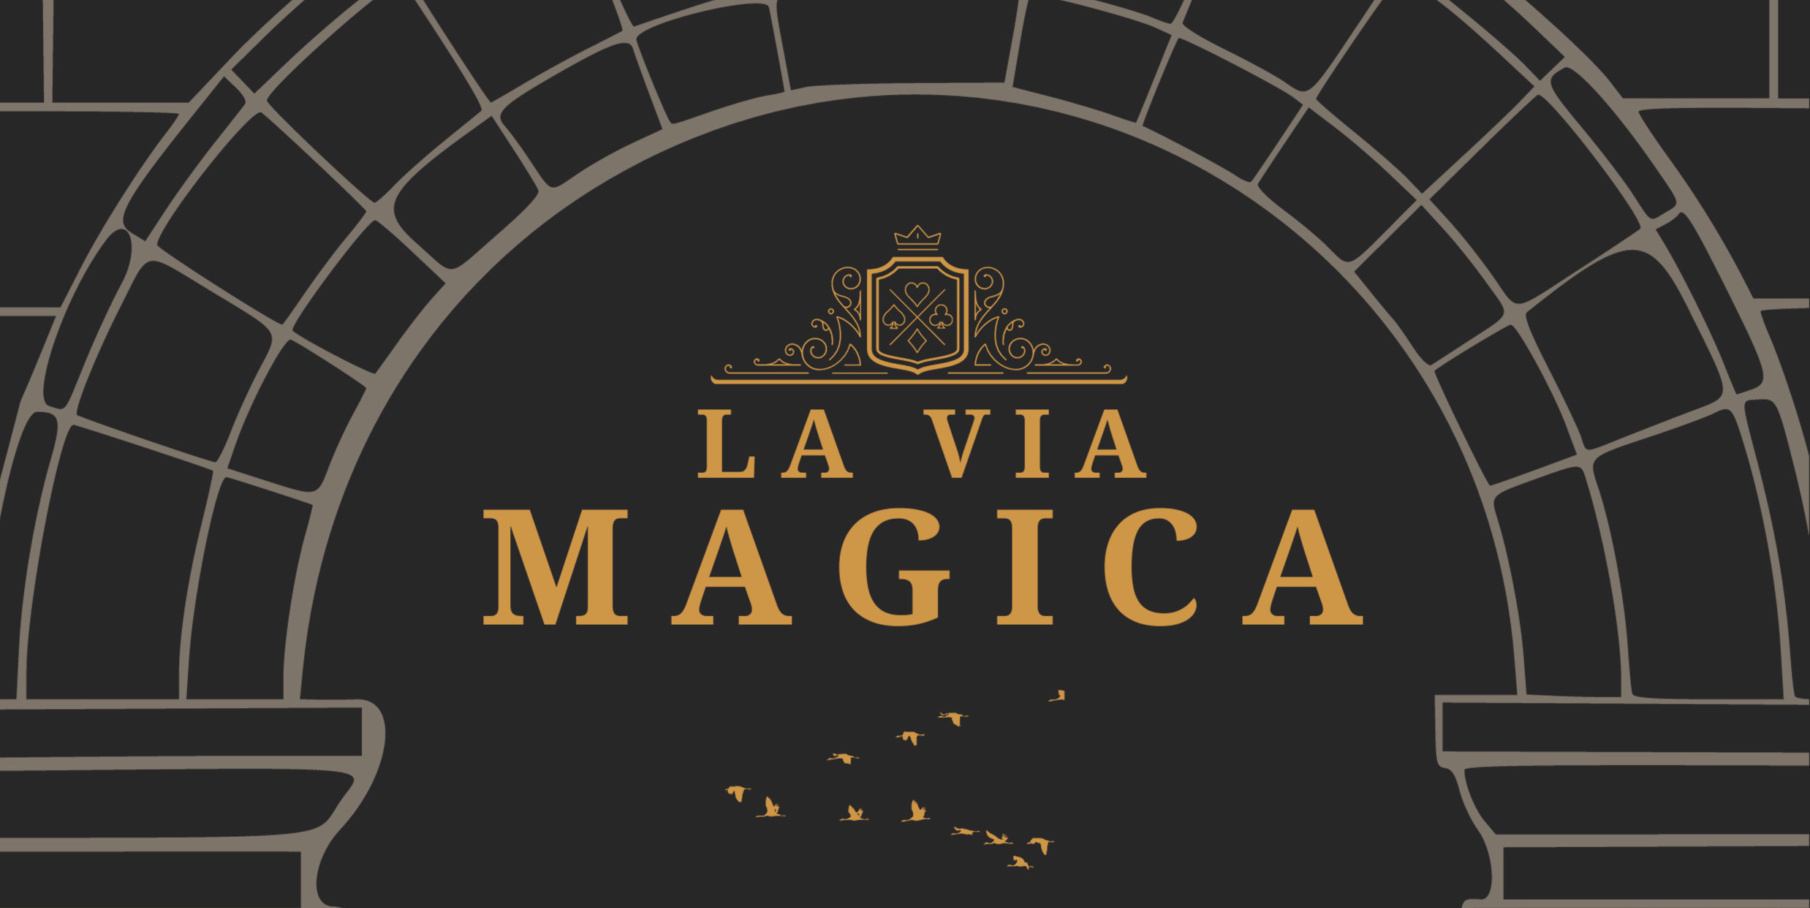 La Via Magica - Zauberkünstler in Zürich